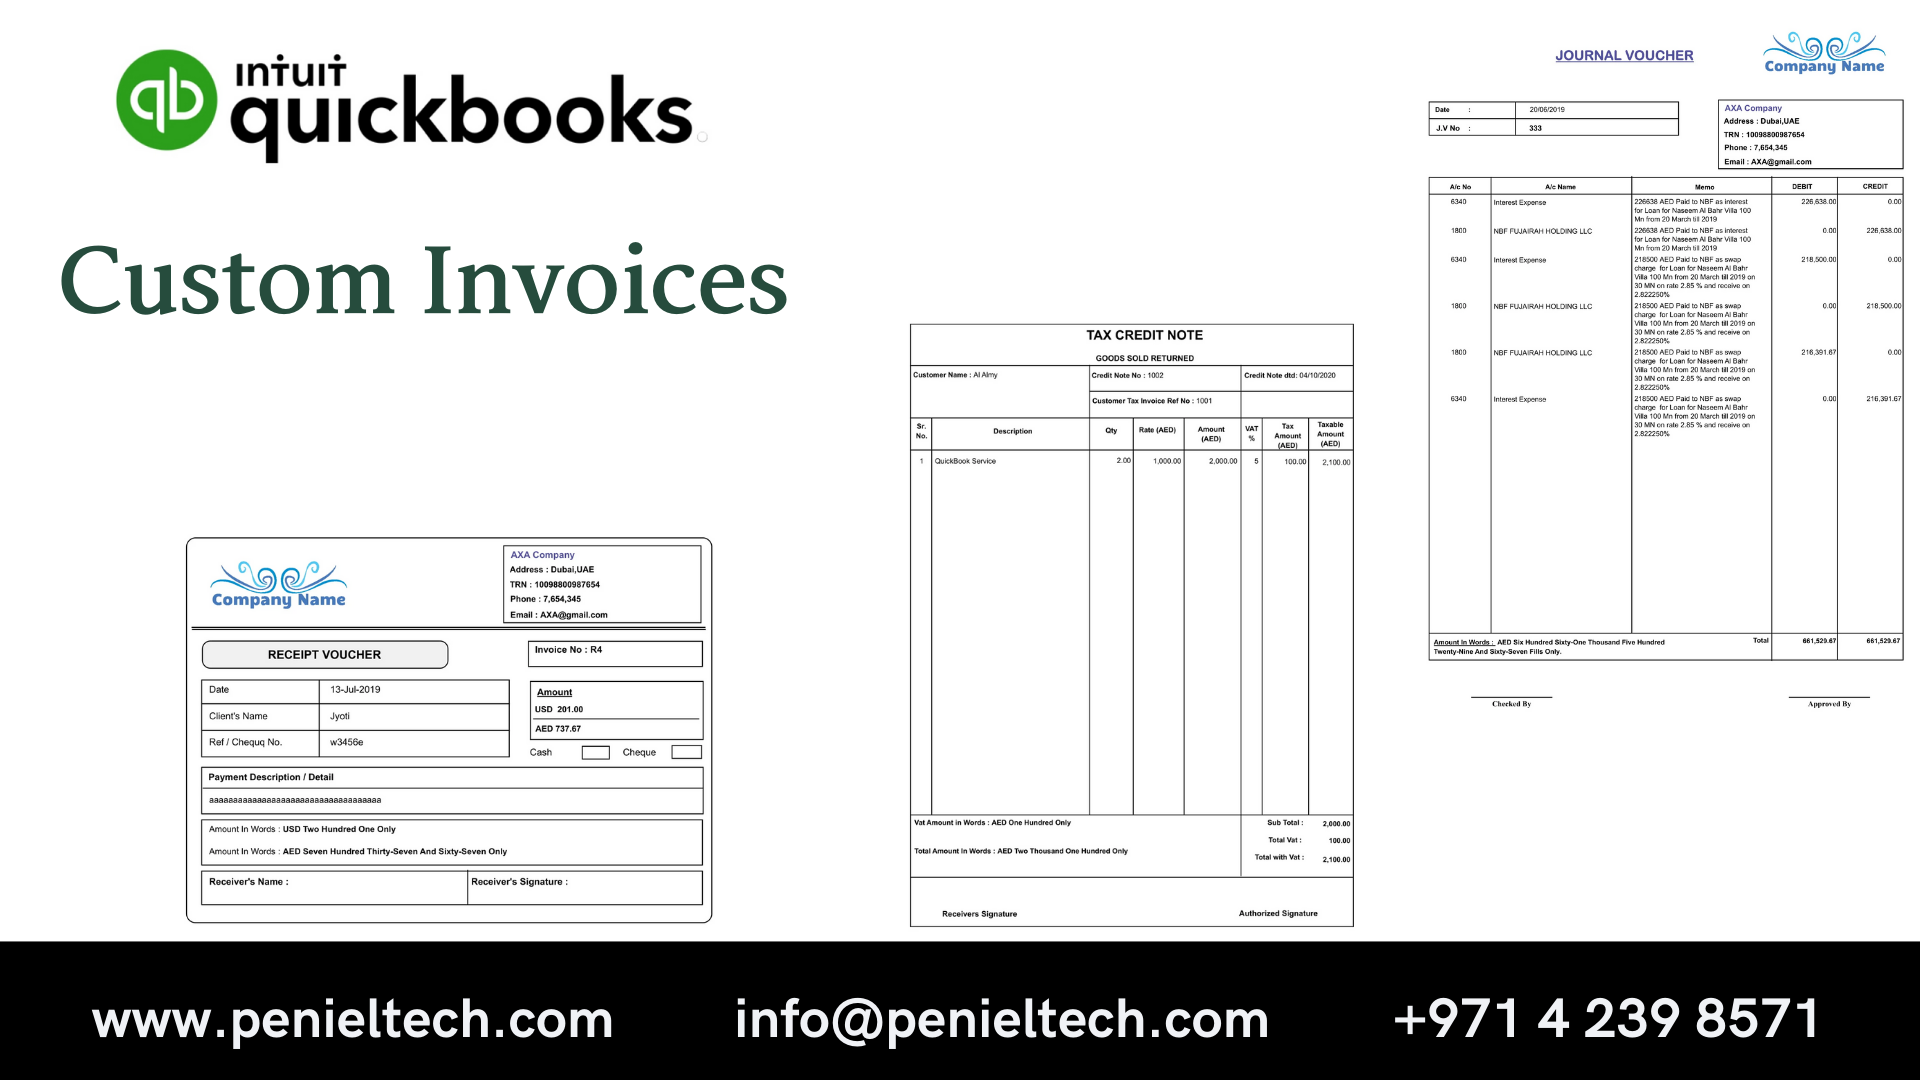 quickbooks sales receipts vs sales order